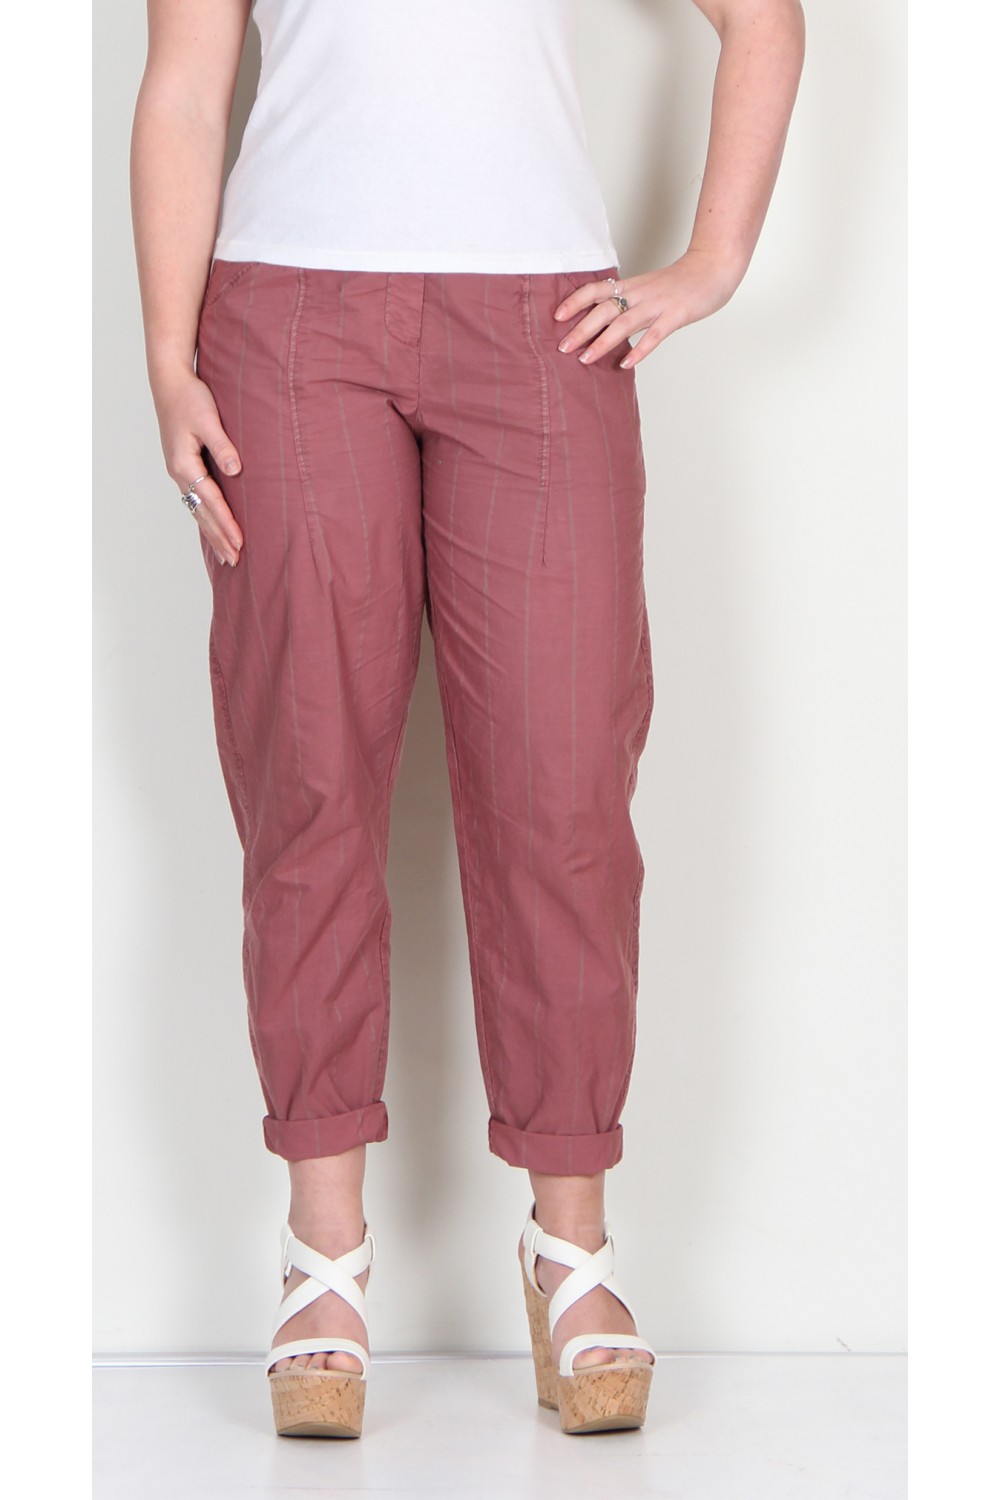 OSKA Trousers Tertia 315 Mauve / Cotton-Linen Blend